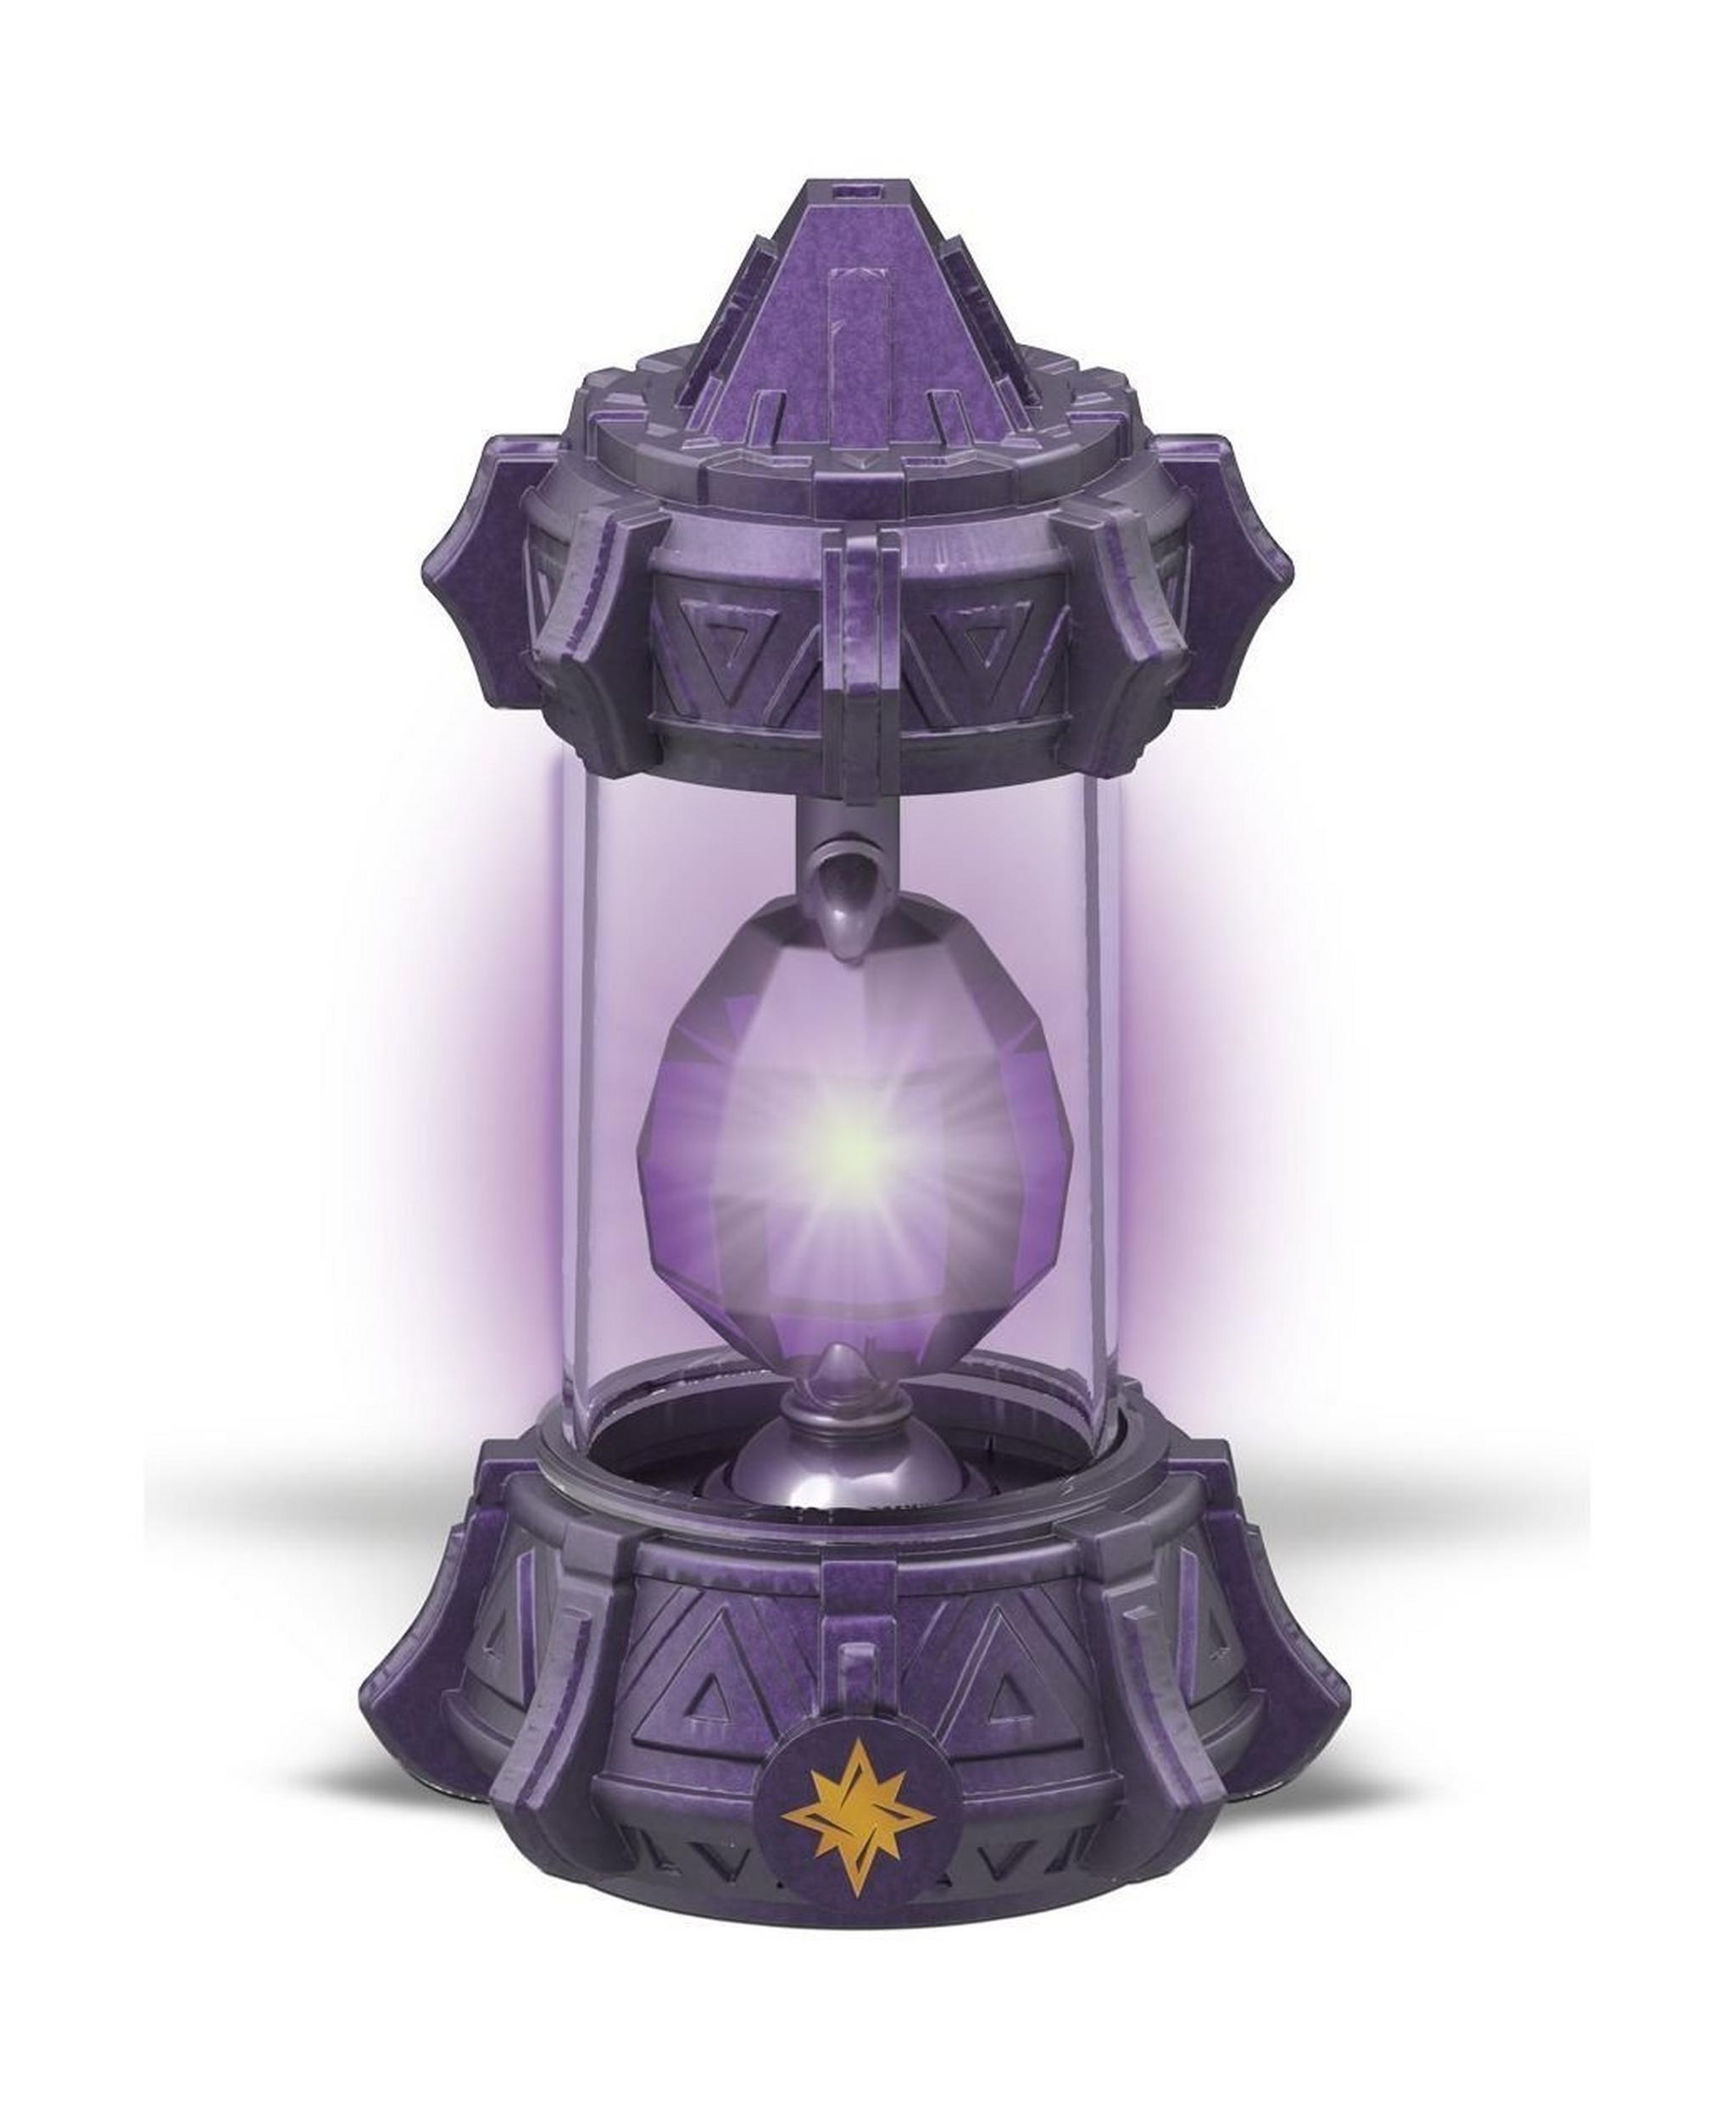 Skylanders Imaginators: Magic Creation Crystal